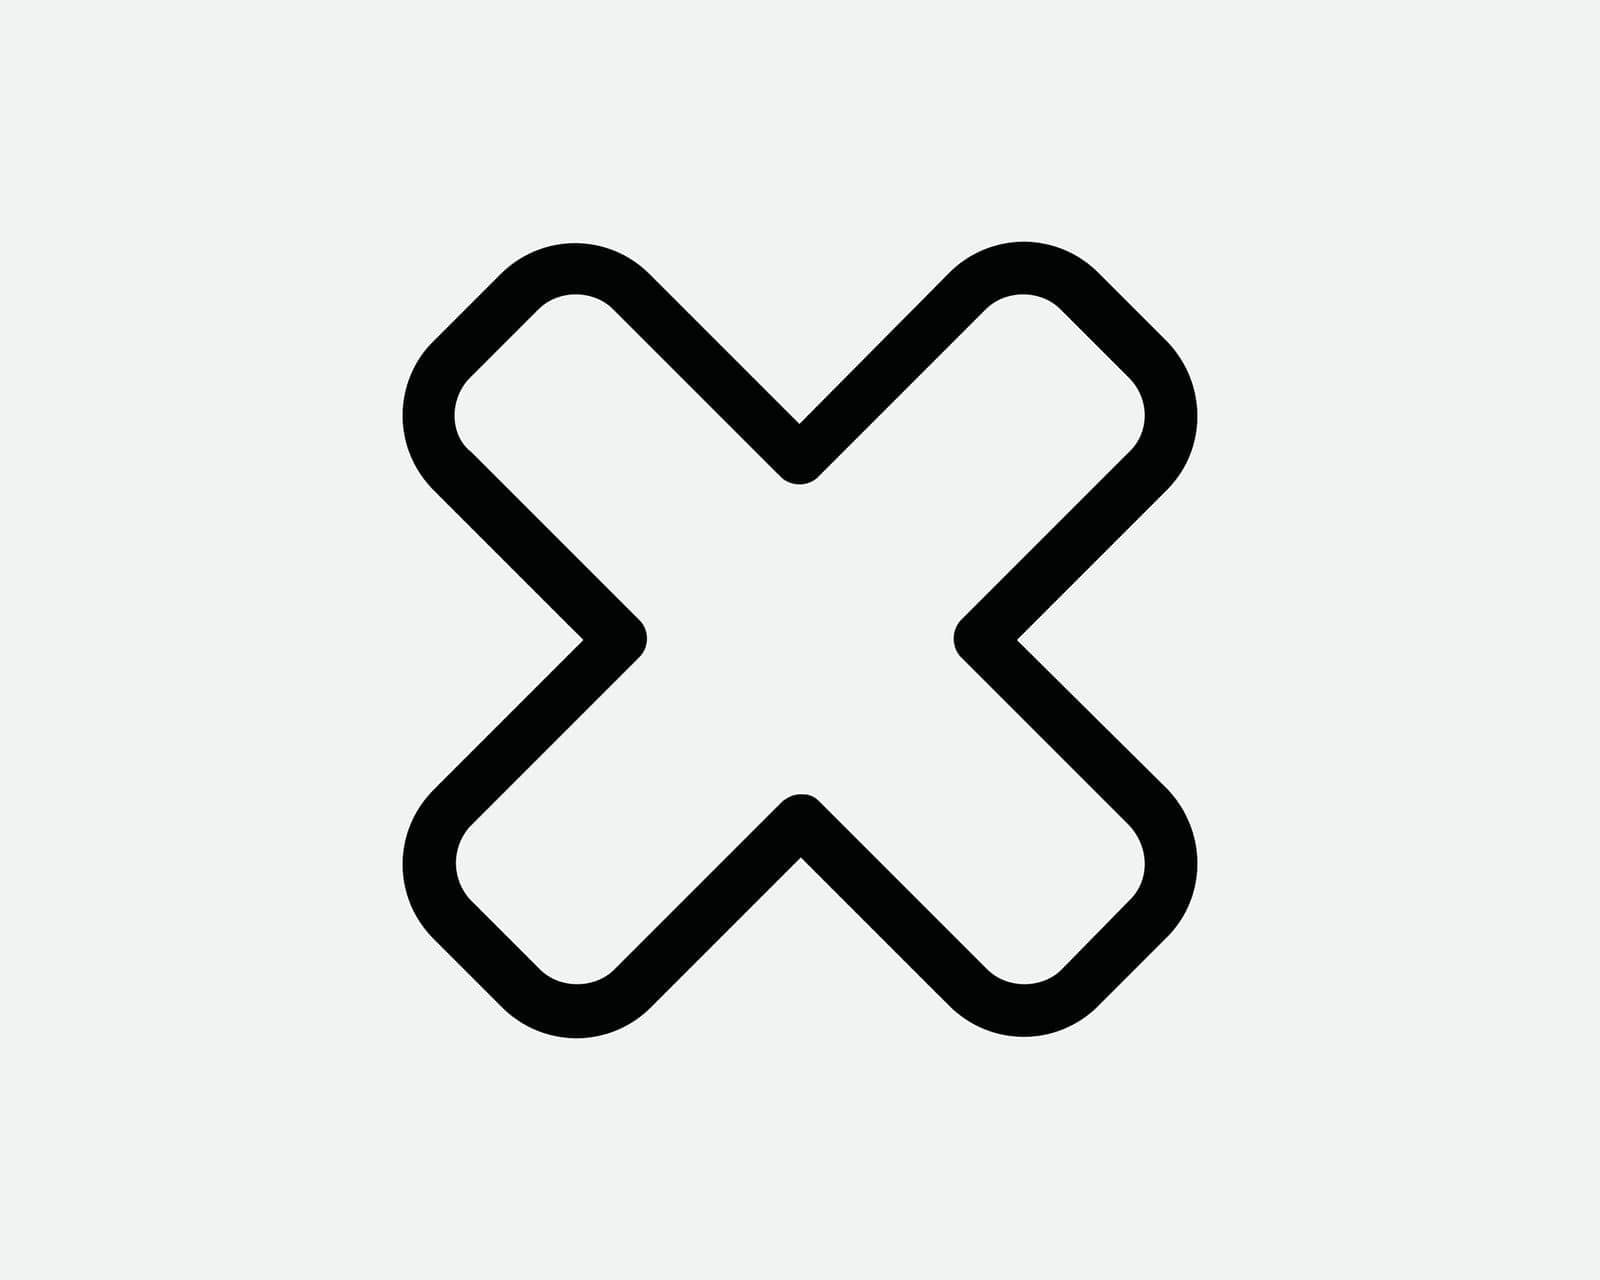 Cross Icon. X Mark Error Problem Negative Reject Wrong Cancel Delete Remove. Black White Sign Symbol Illustration Artwork Graphic Clipart EPS Vector